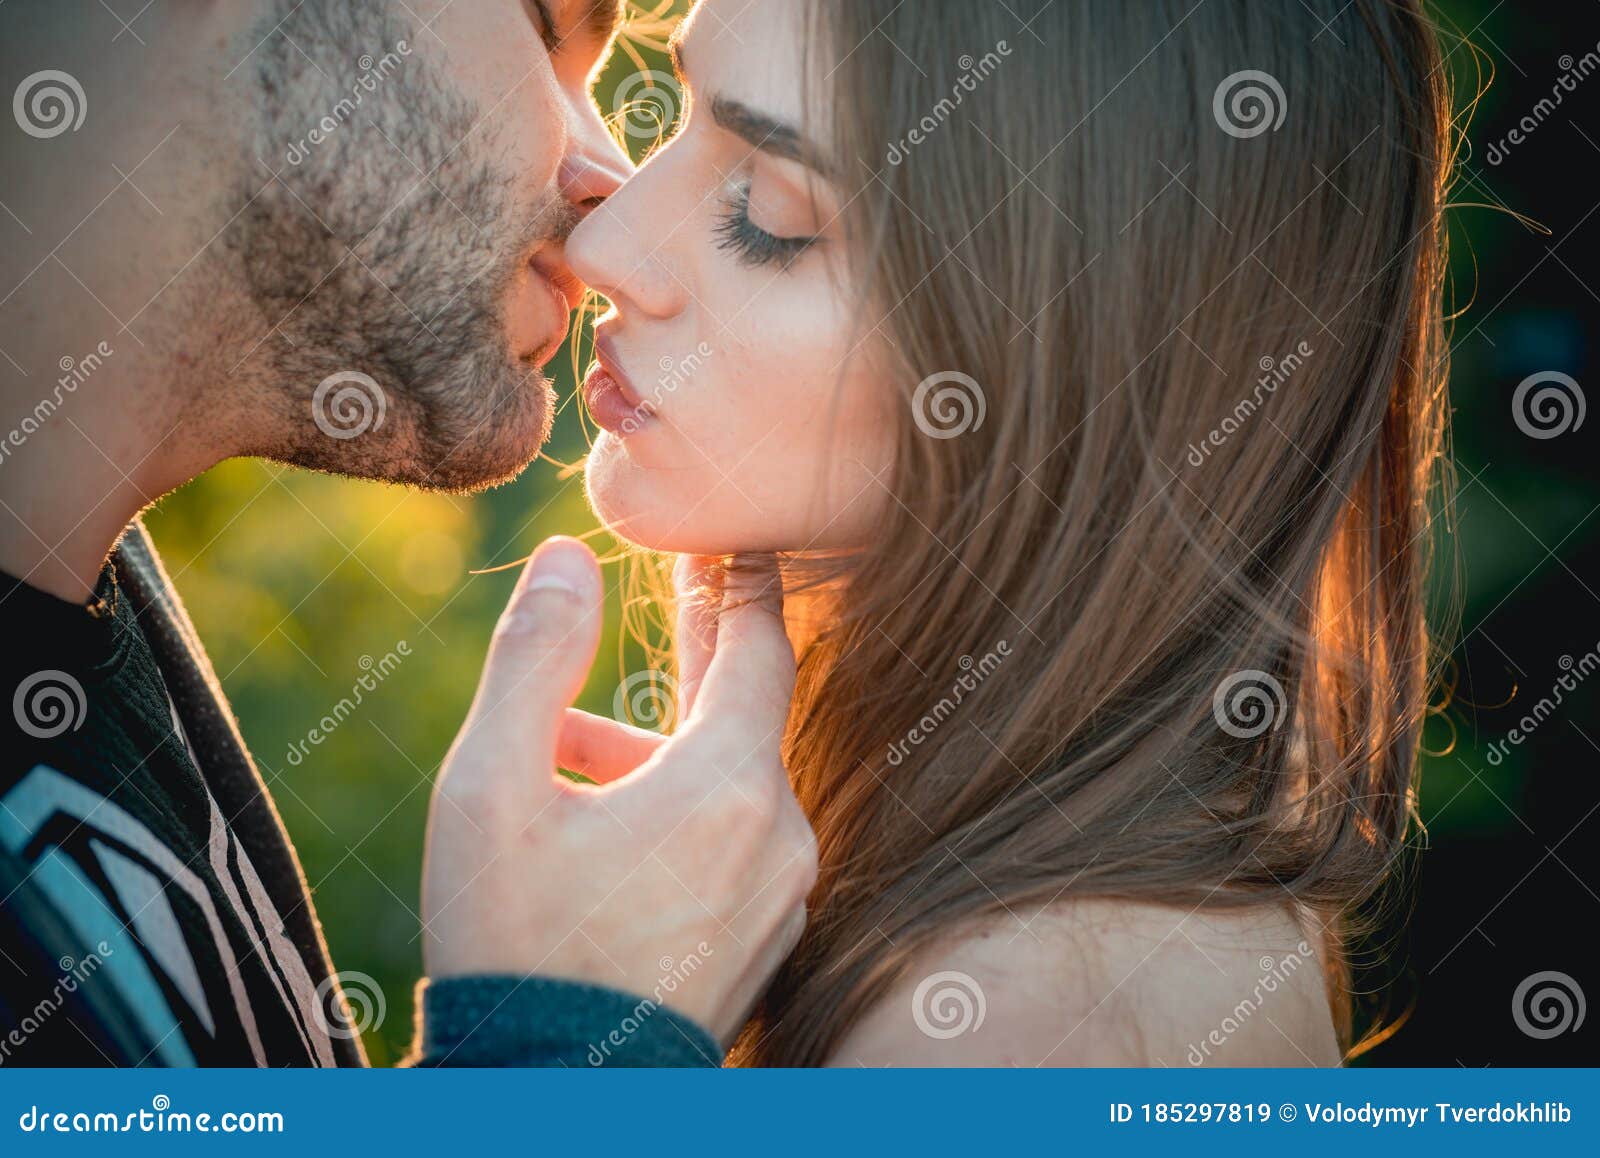 Love Couple Kiss